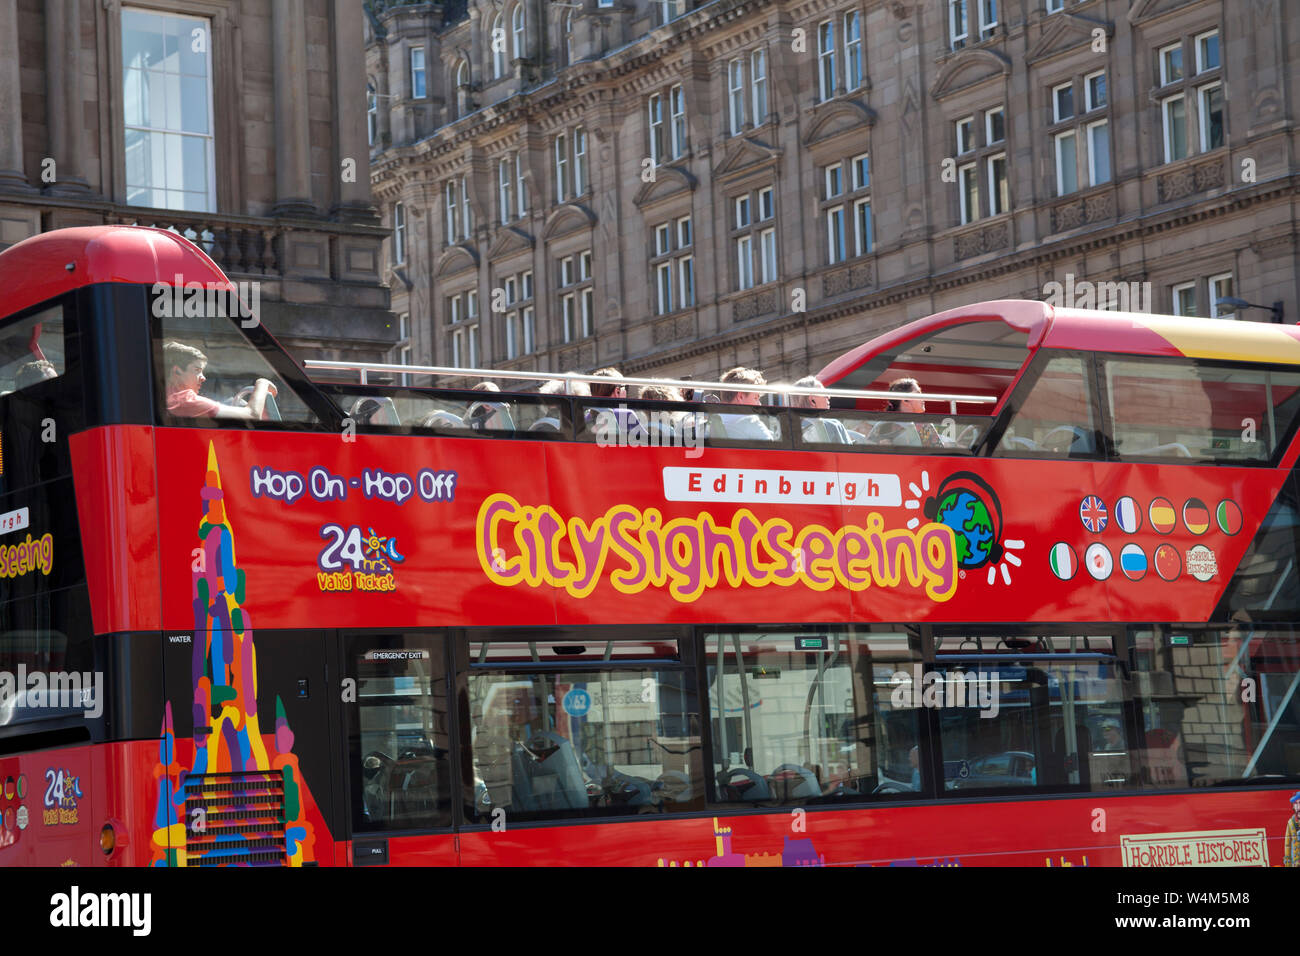 Edinburgh city sightseeing tour bus, Scotland, UK Stock Photo